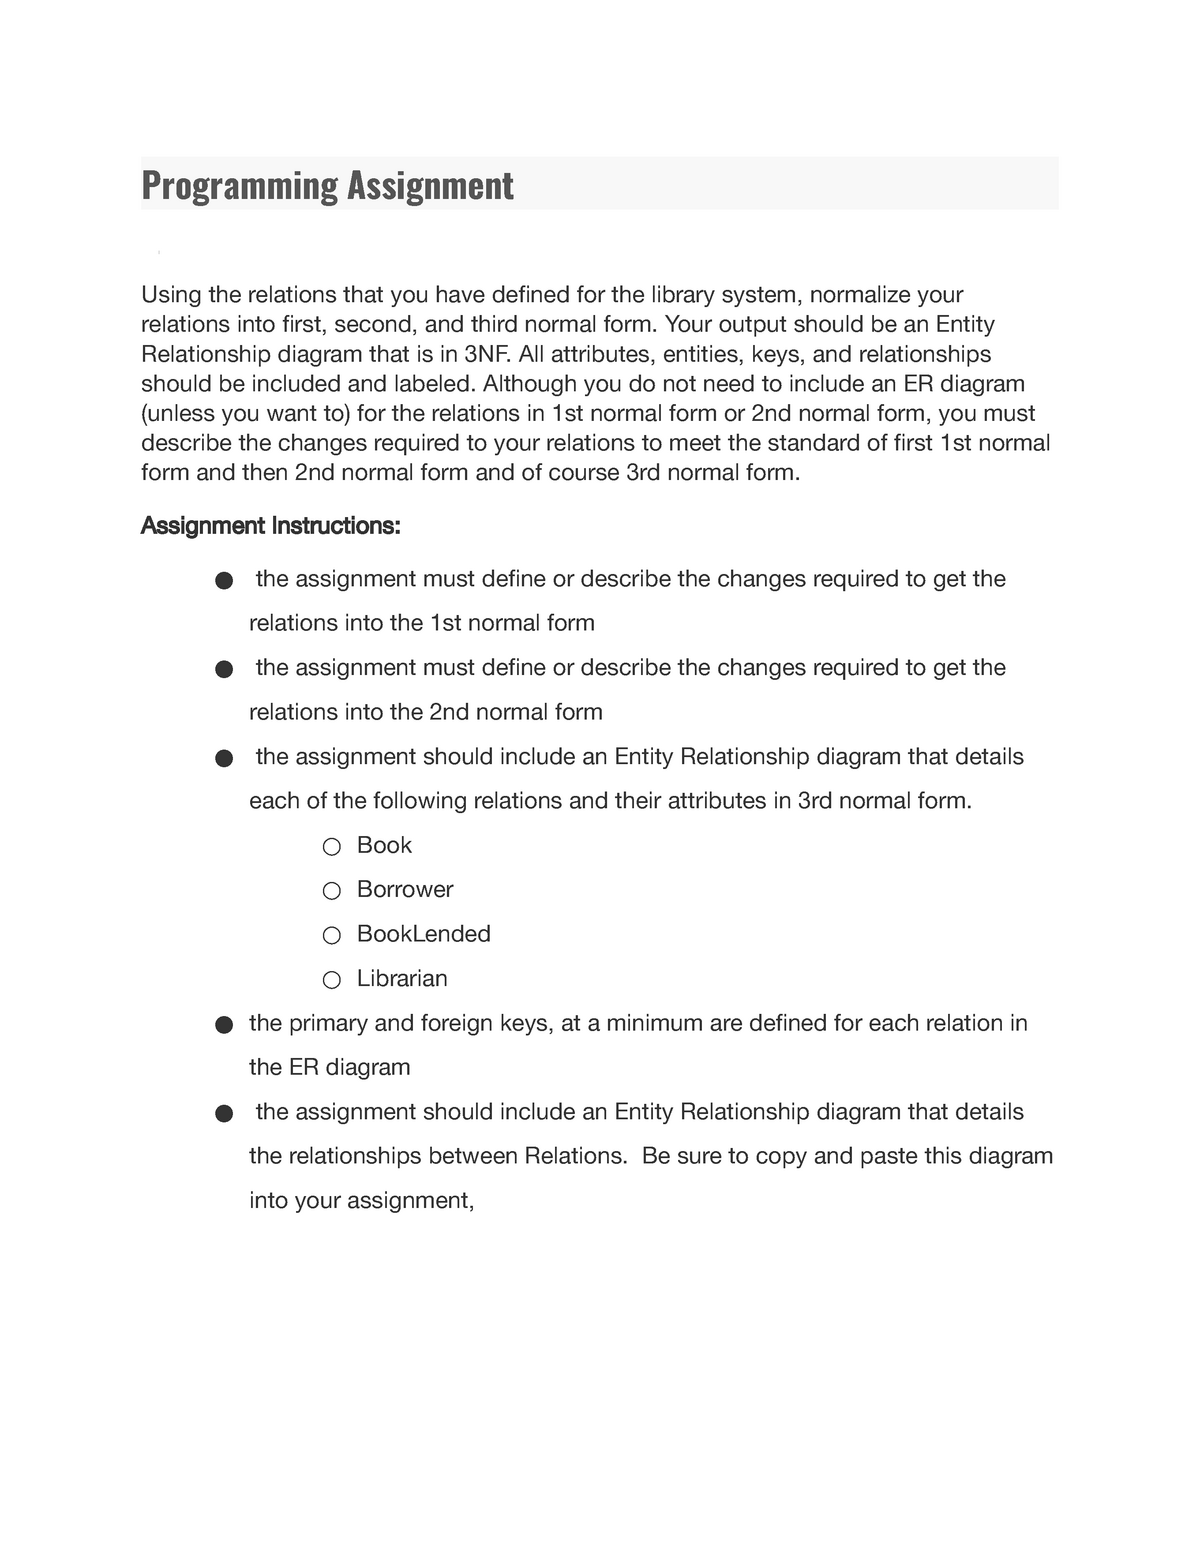 unit 4 assignment 1 programming